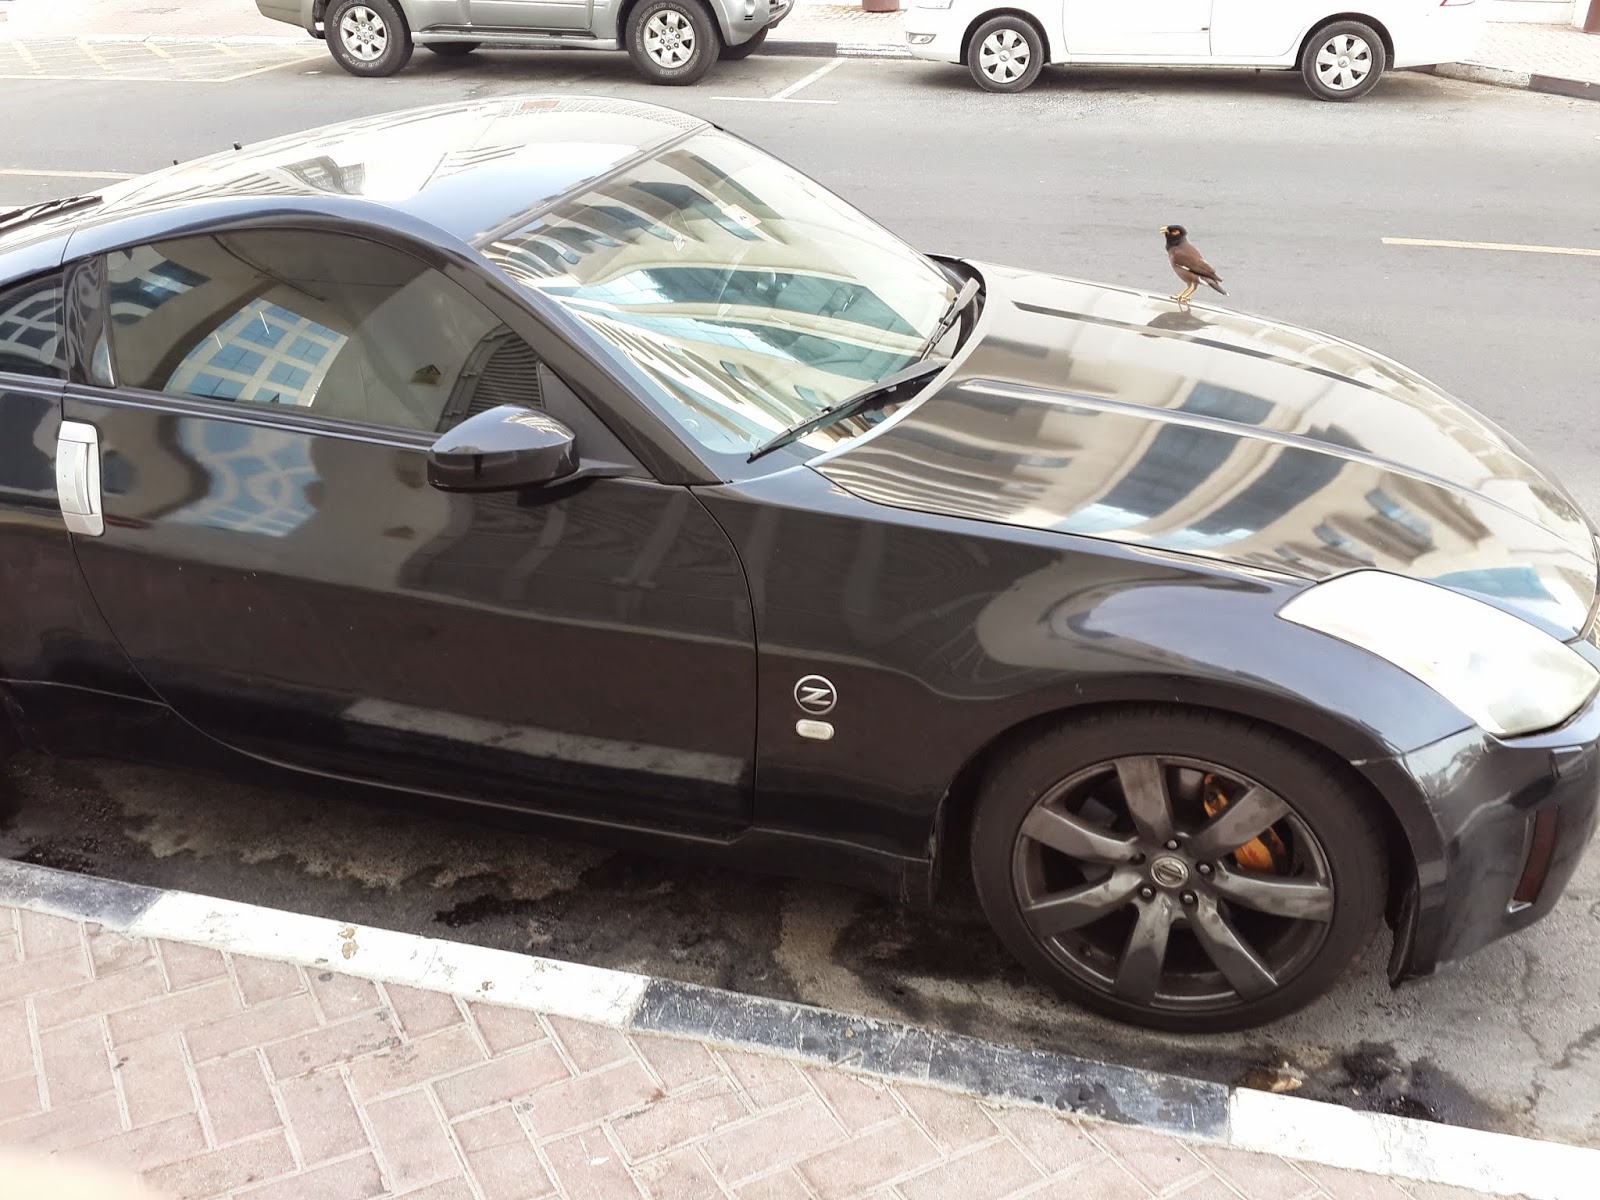 Dubai Elite Cars: Second Hand Cars in Dubai are Good as New